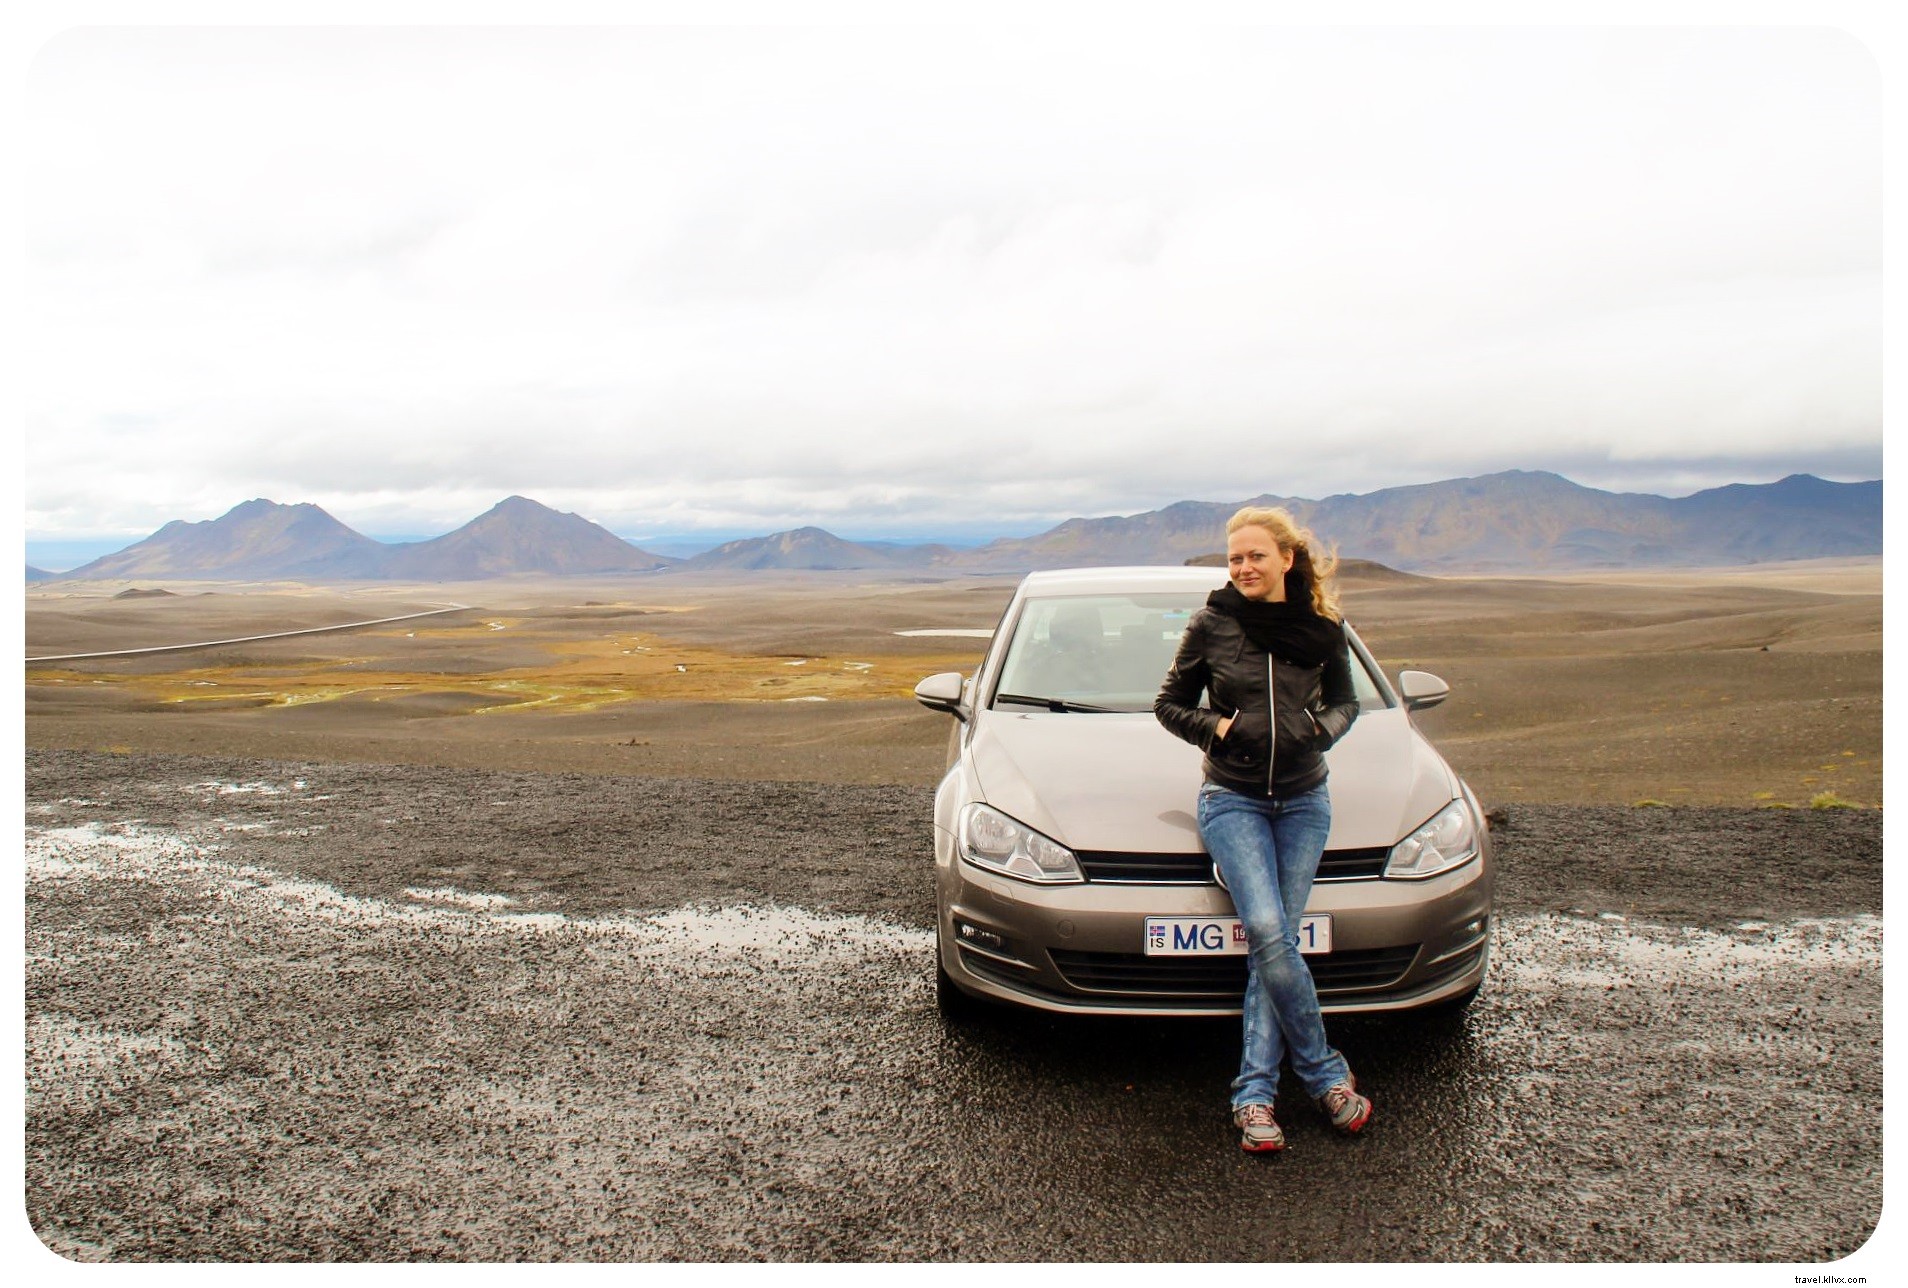 Le road trip le plus épique en Islande, Partie II (+ Conseils pour conduire en Islande)